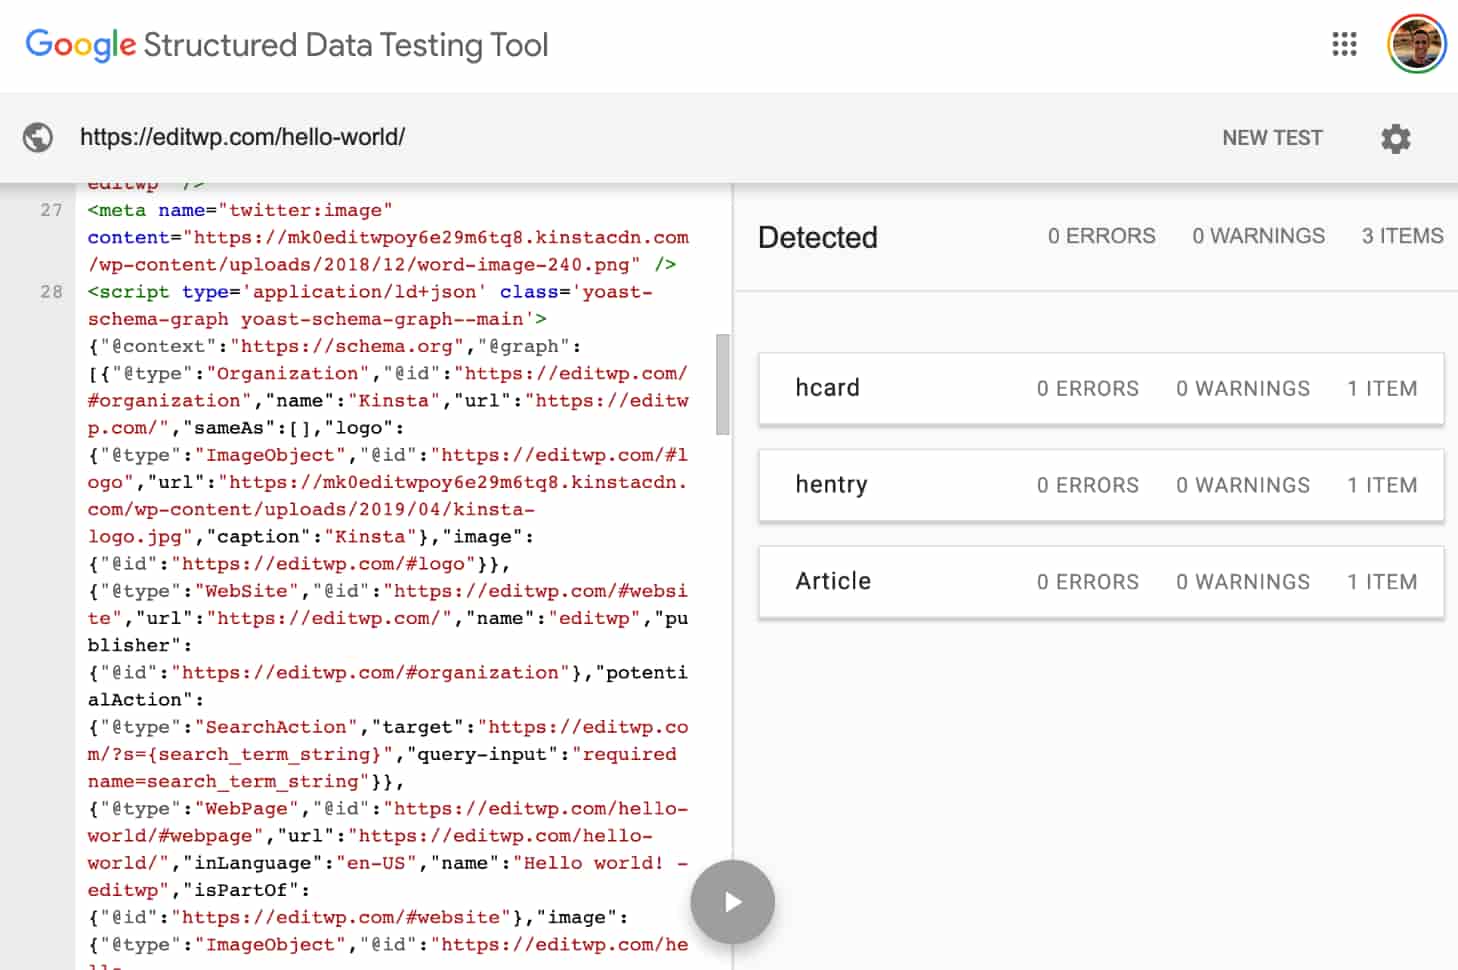 A screenshot showing Google Structured Data Testing Tool